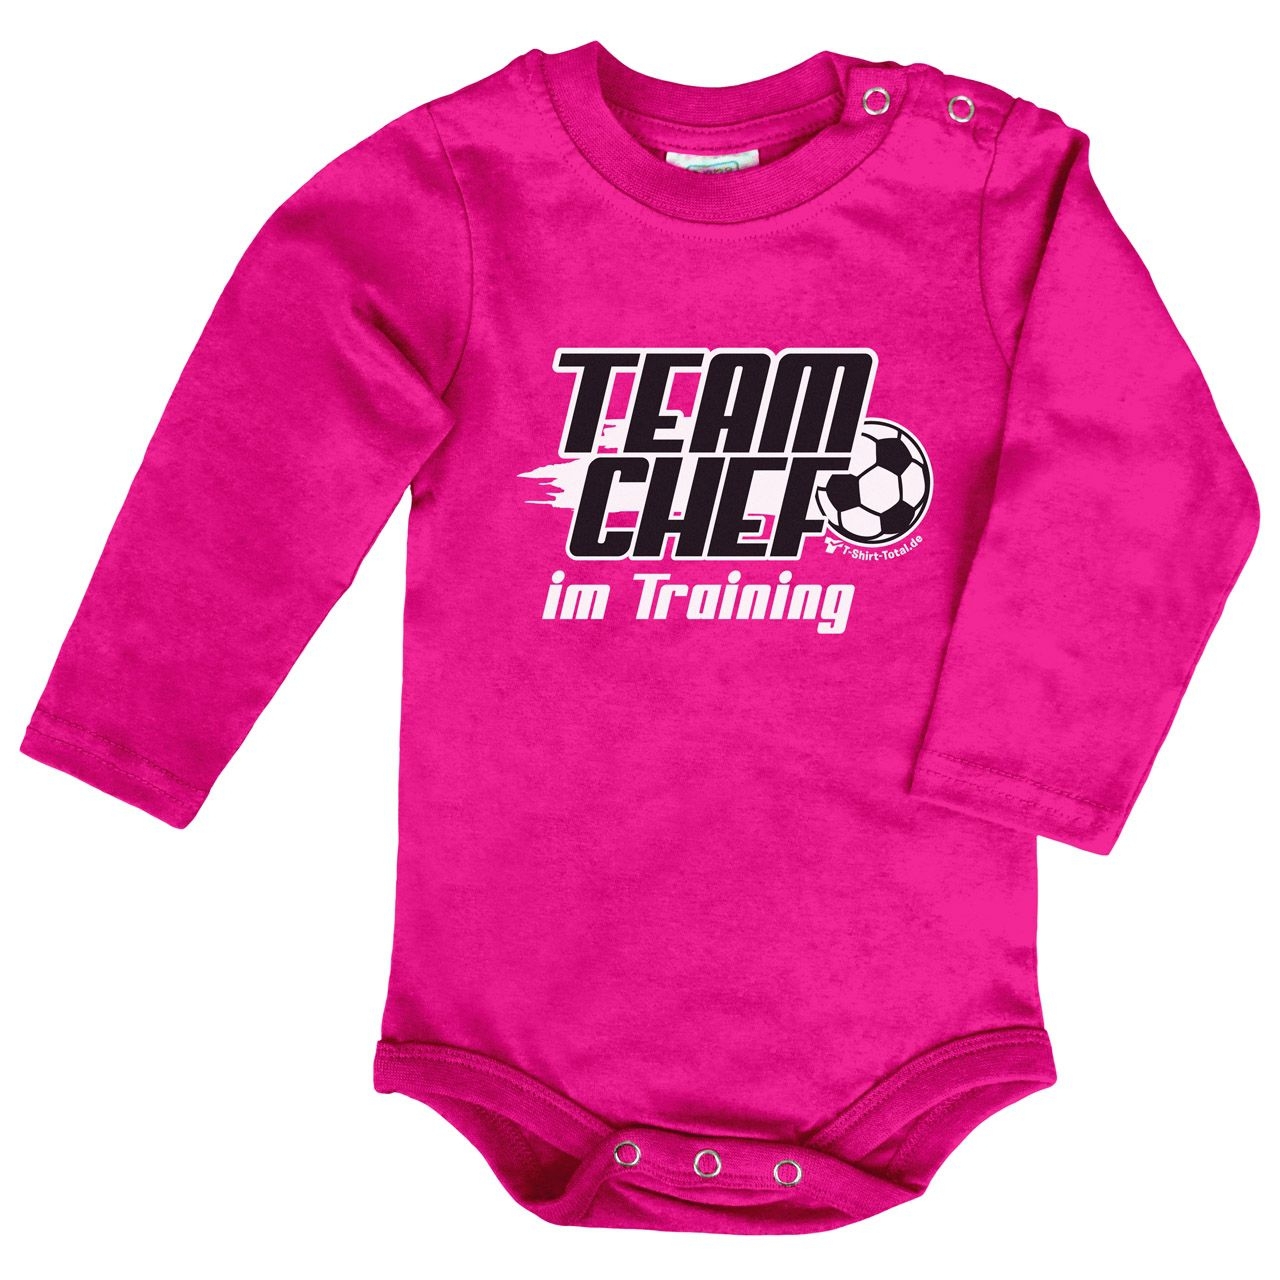 Teamchef im Training Baby Body Langarm pink 68 / 74